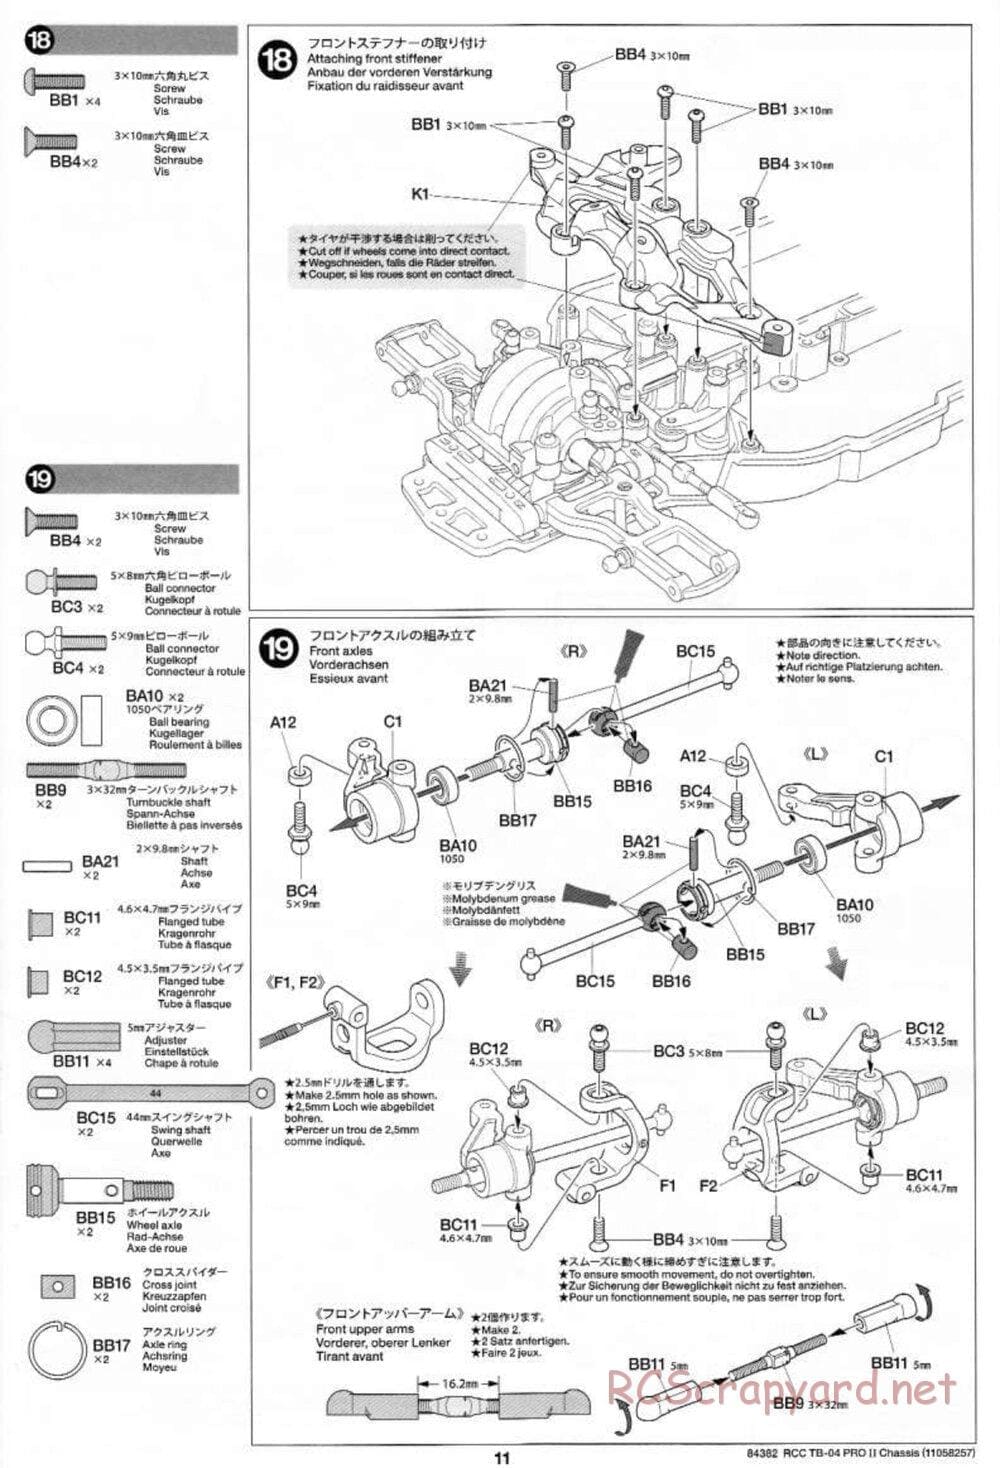 Tamiya - TB-04 Pro II Chassis - Manual - Page 11